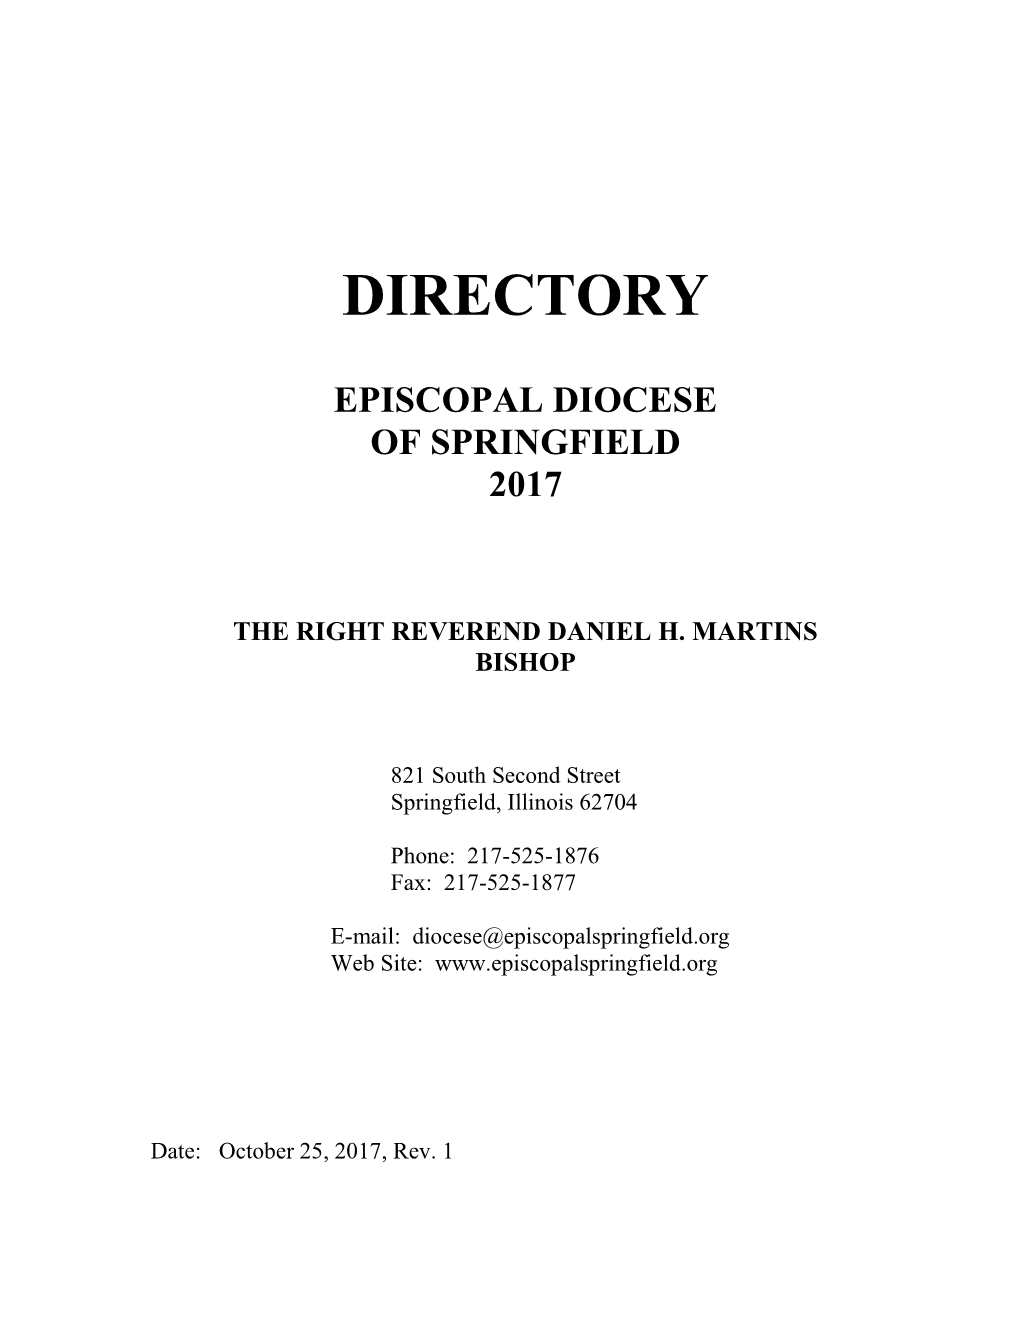 2004 Directory